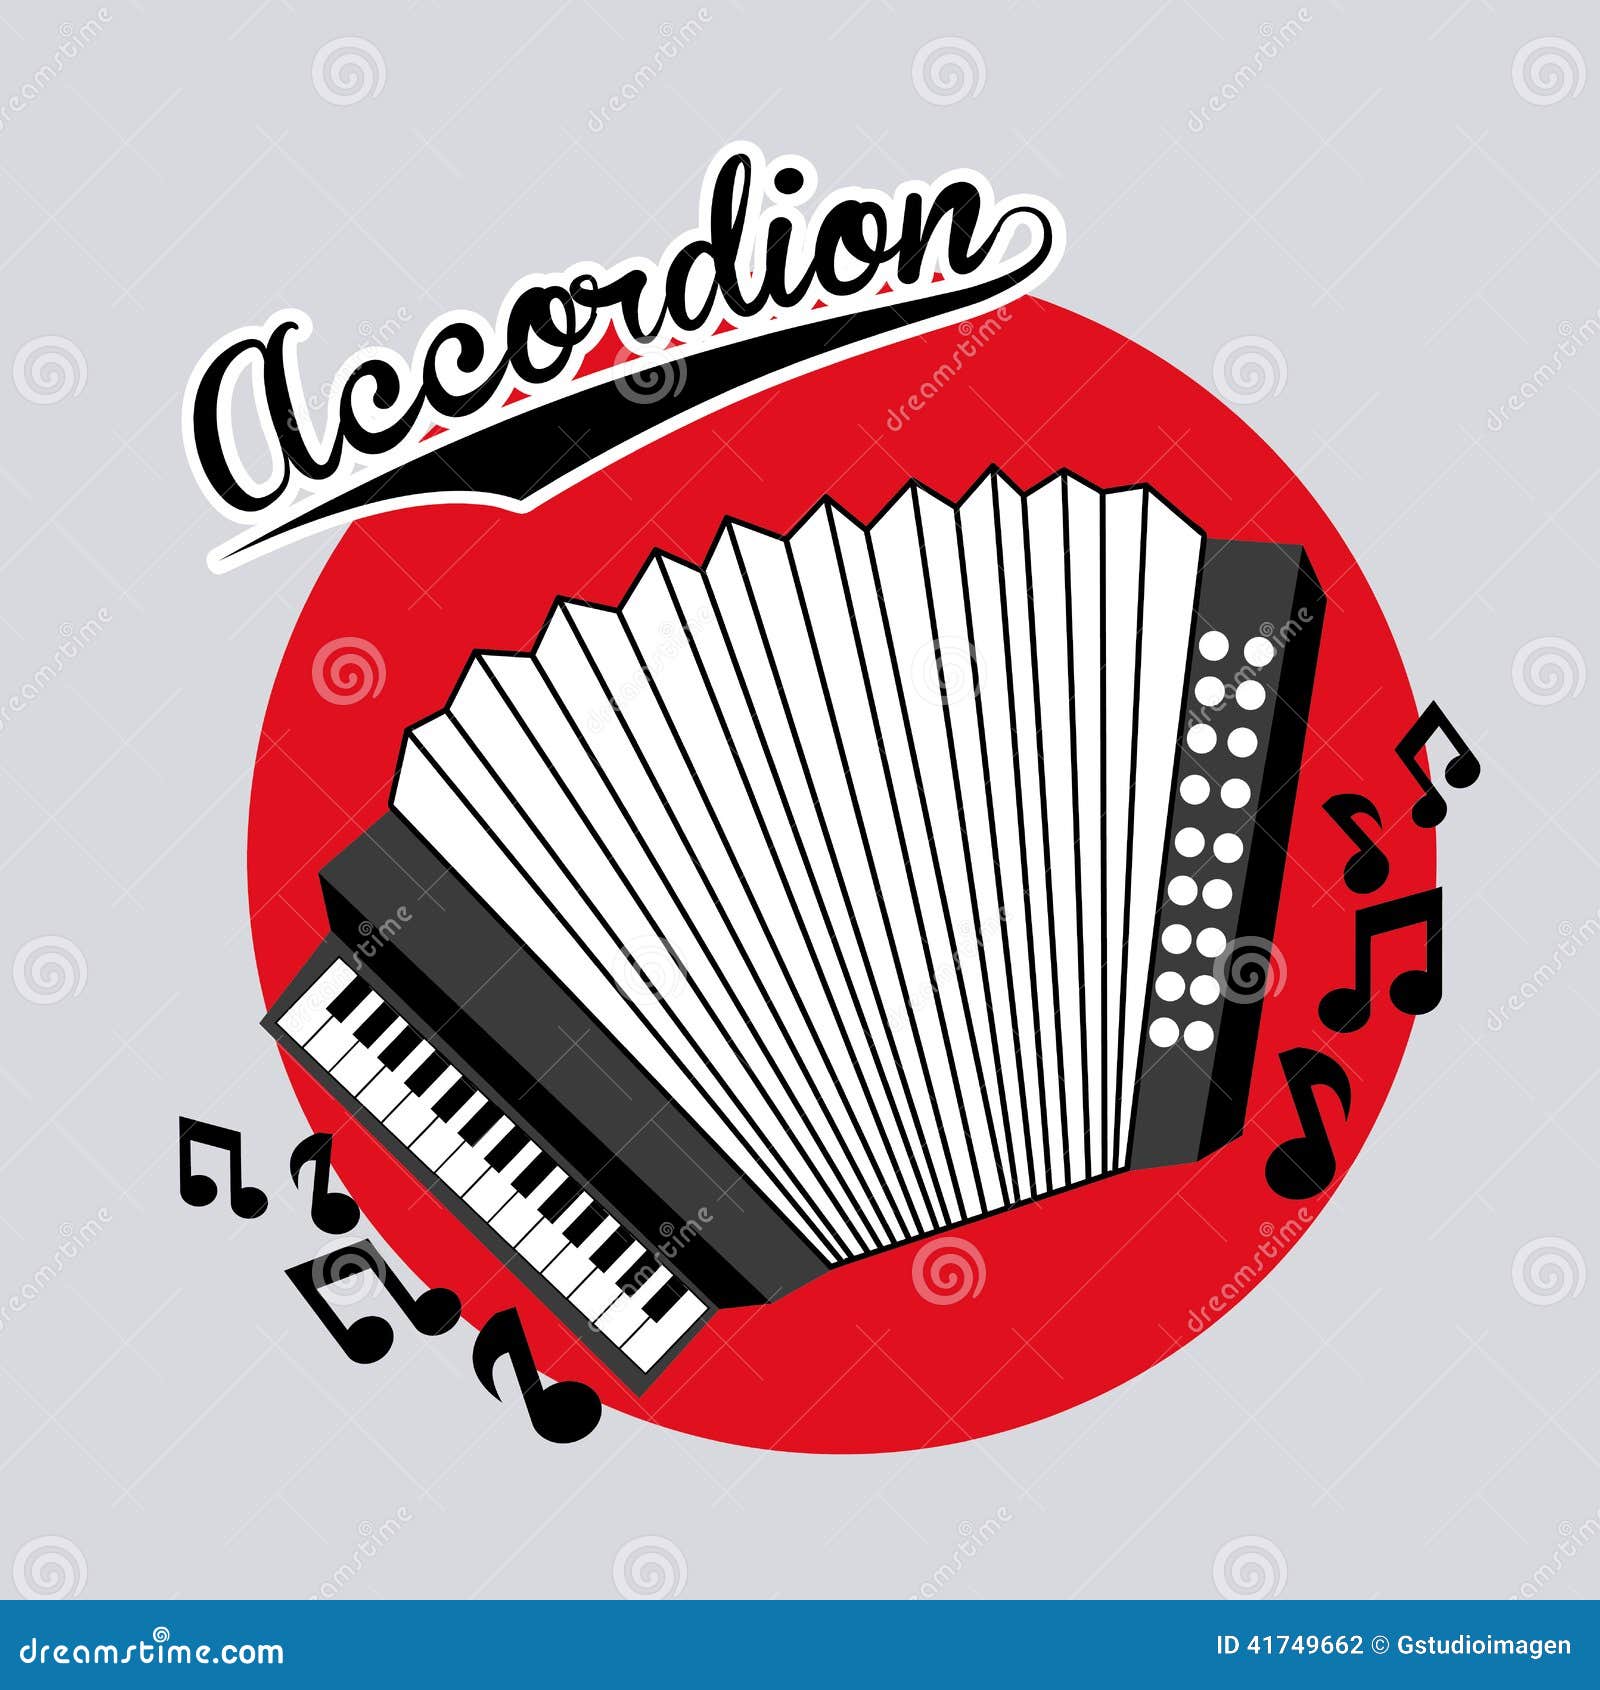 Music design stock vector. Illustration of element, relaxing - 41749662